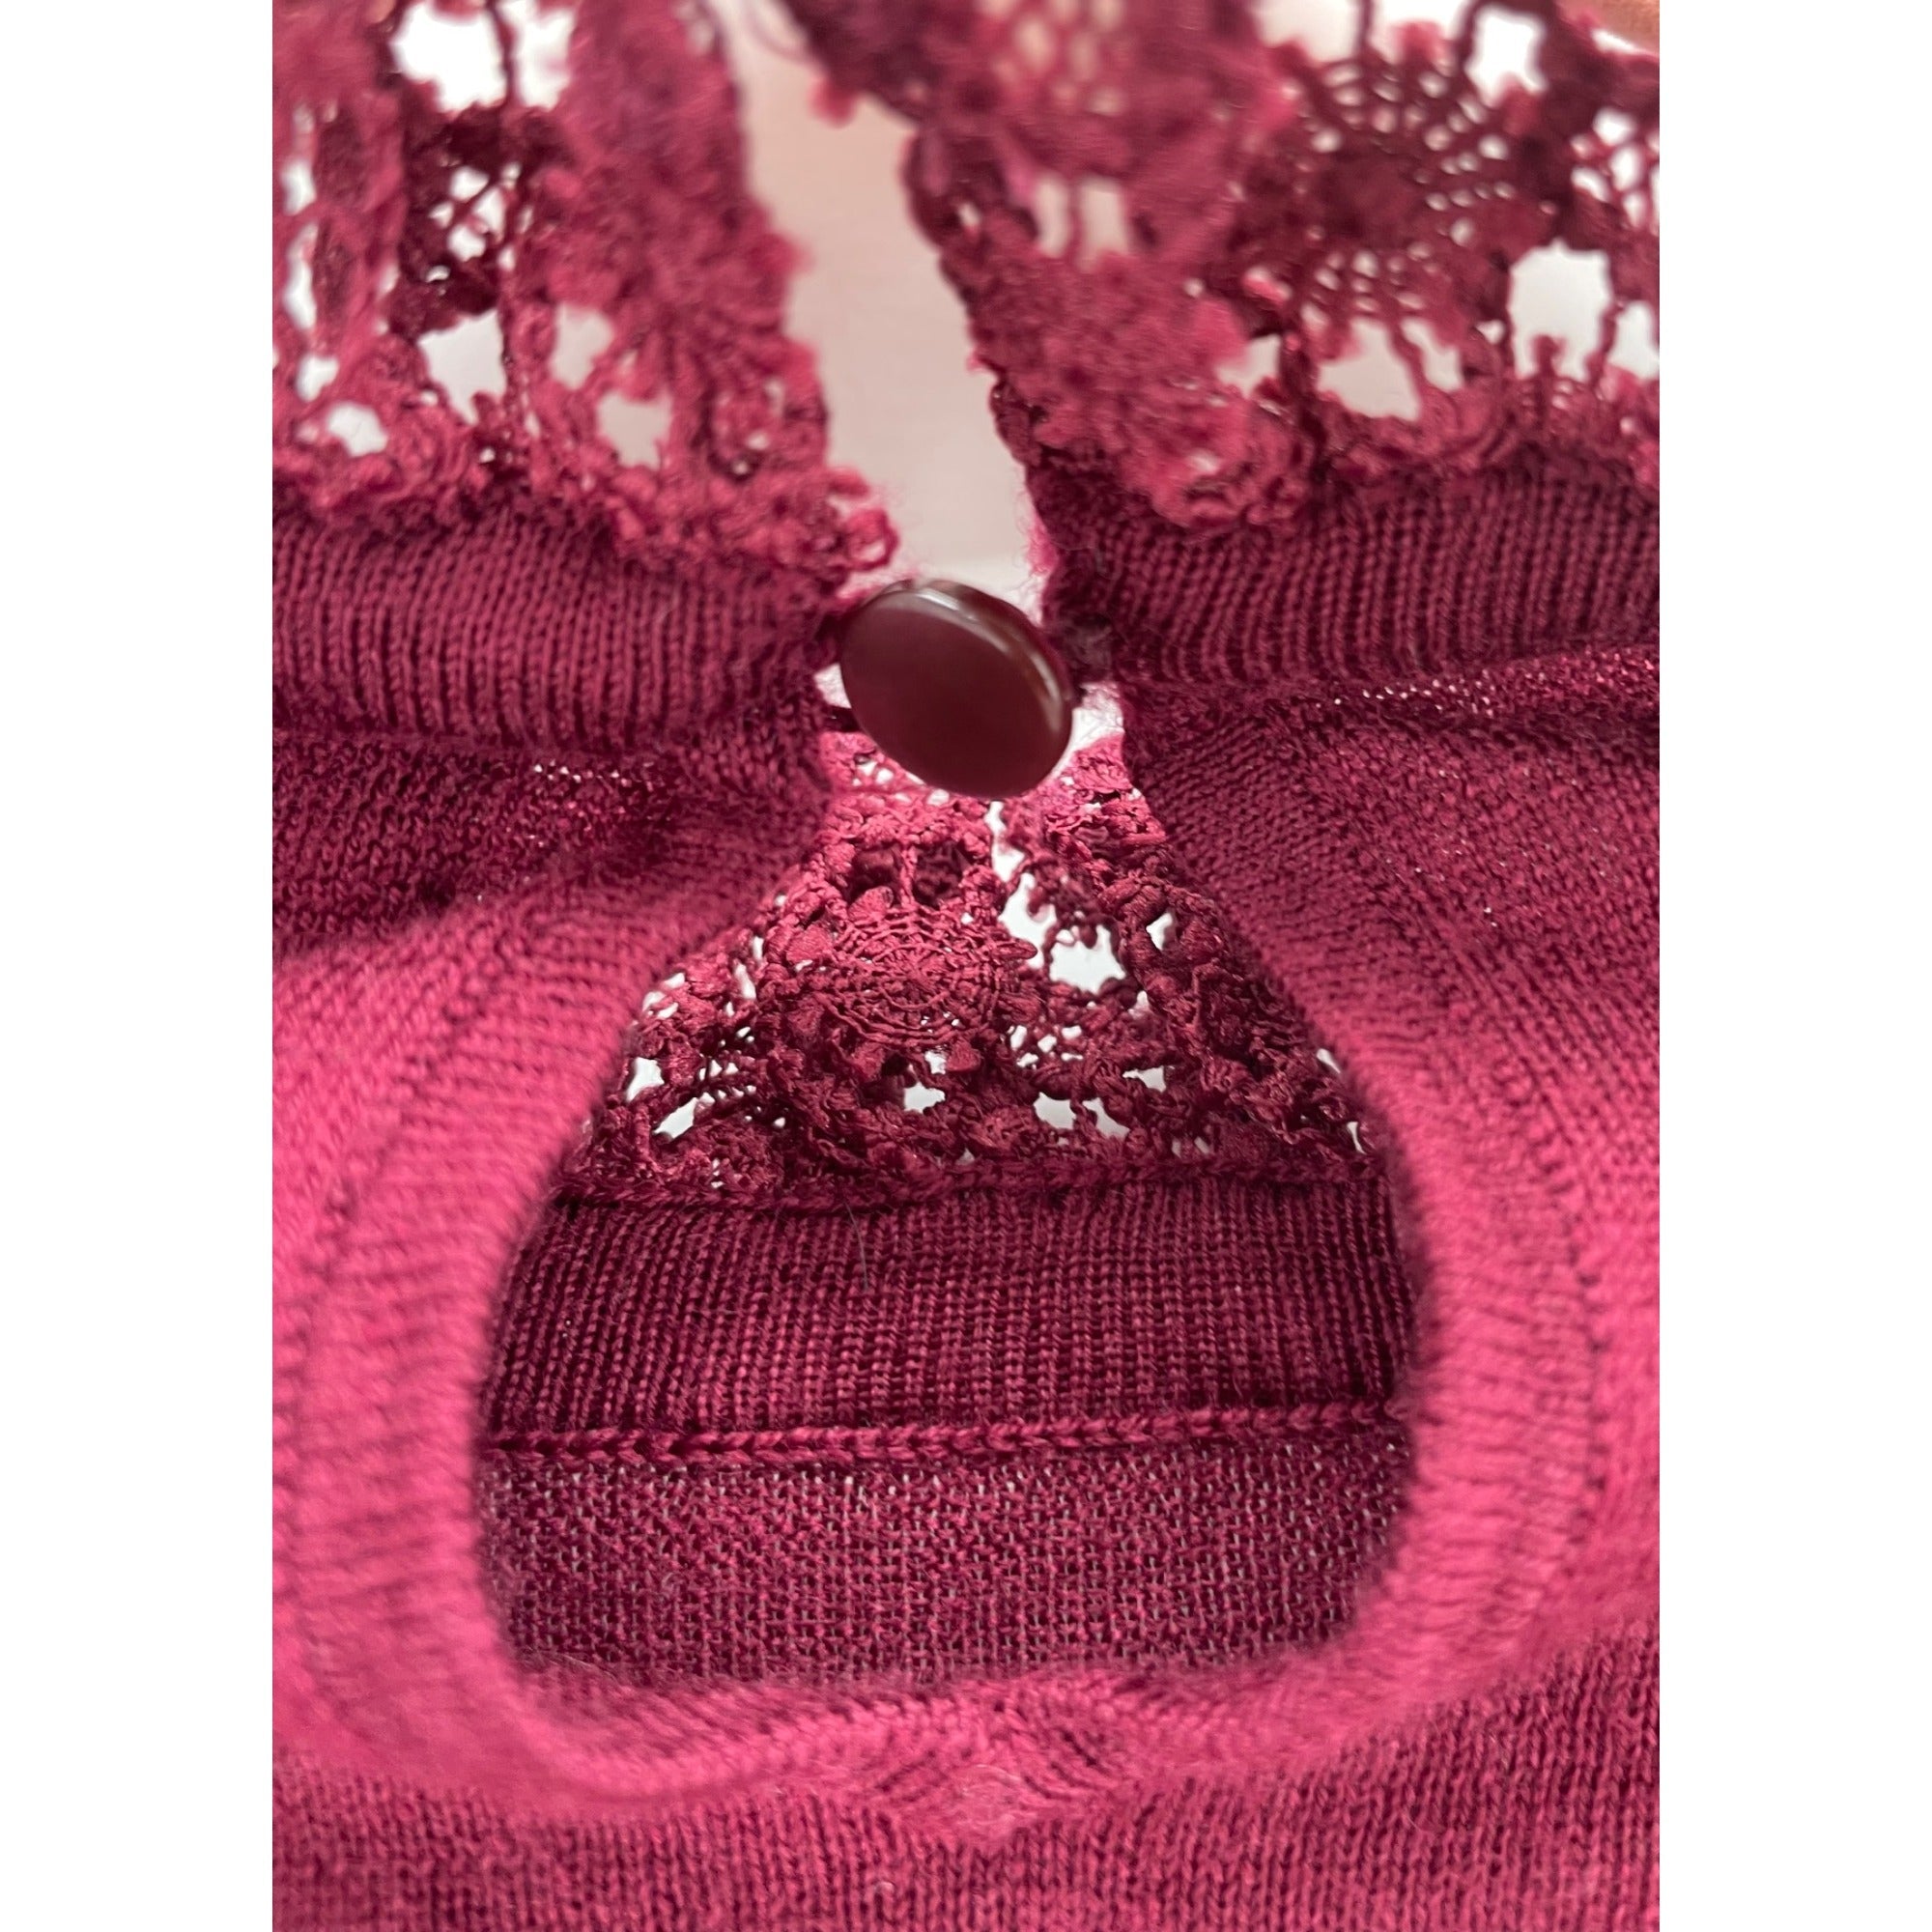 J. Crew Women’s Large Burgundy/Maroon Floral Collar Sweater